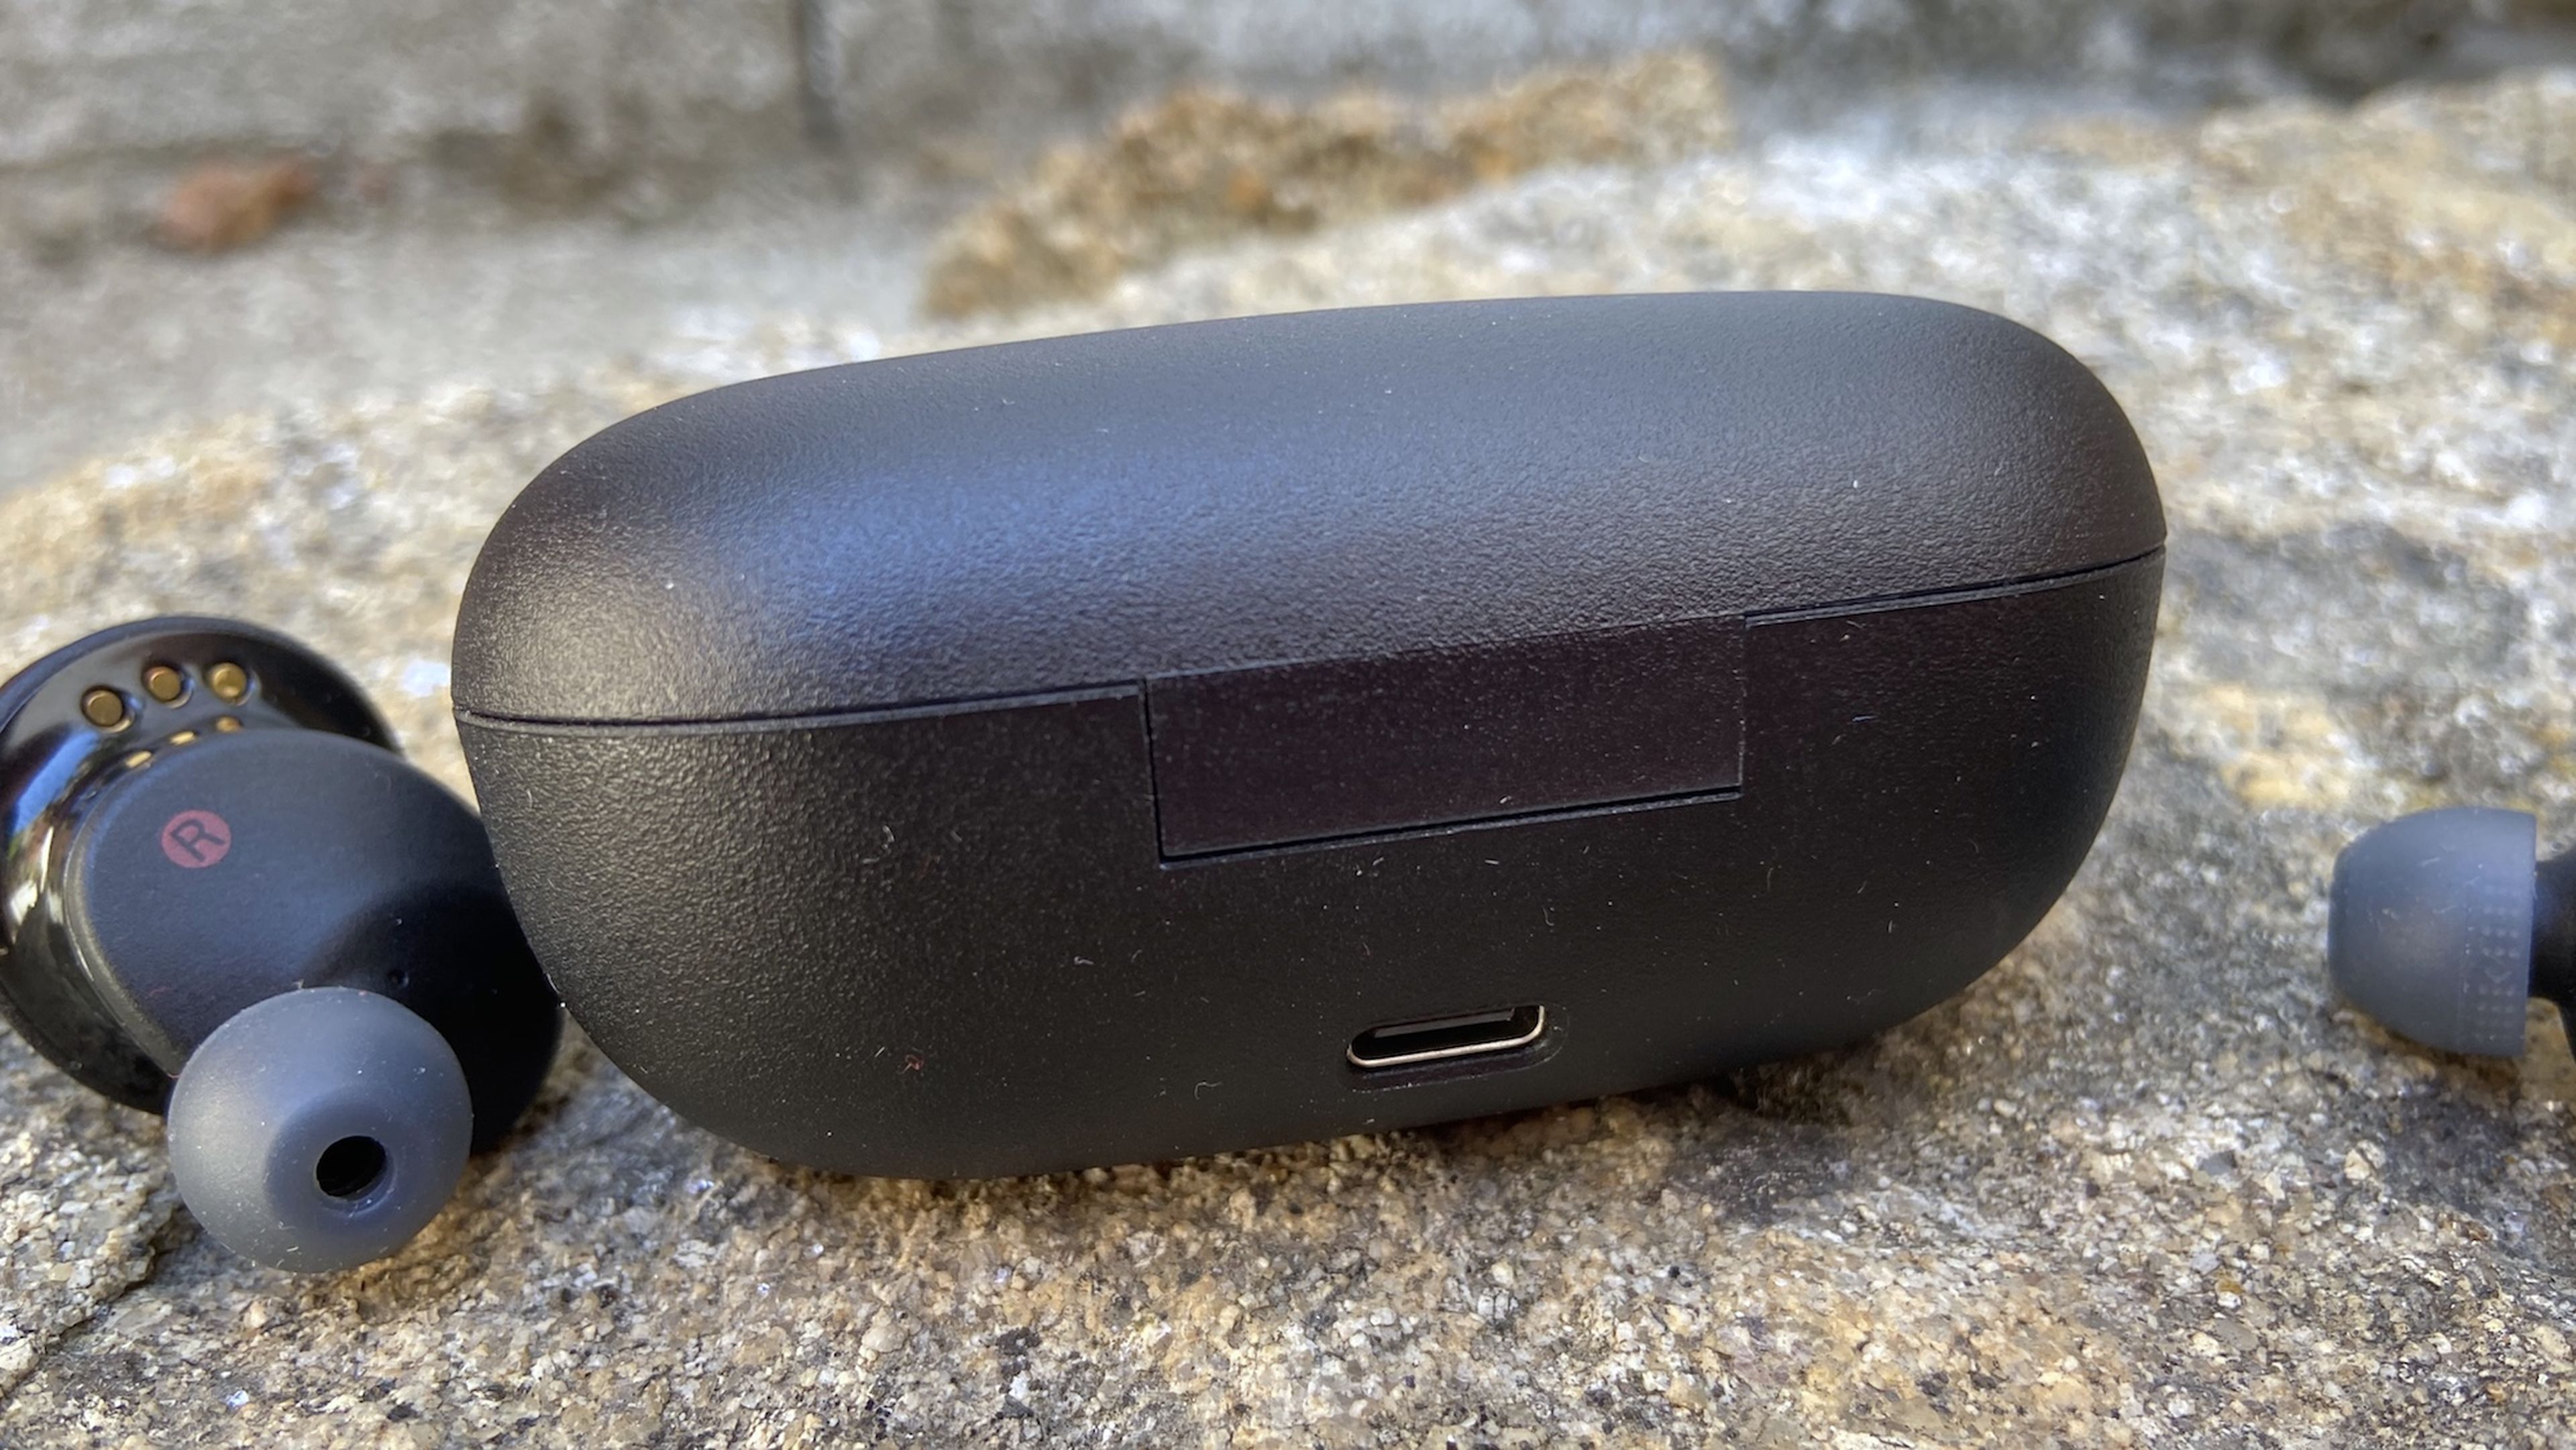 Sony WF-XB700 Auriculares inalámbricos True Wireless Bluetooth, color negro